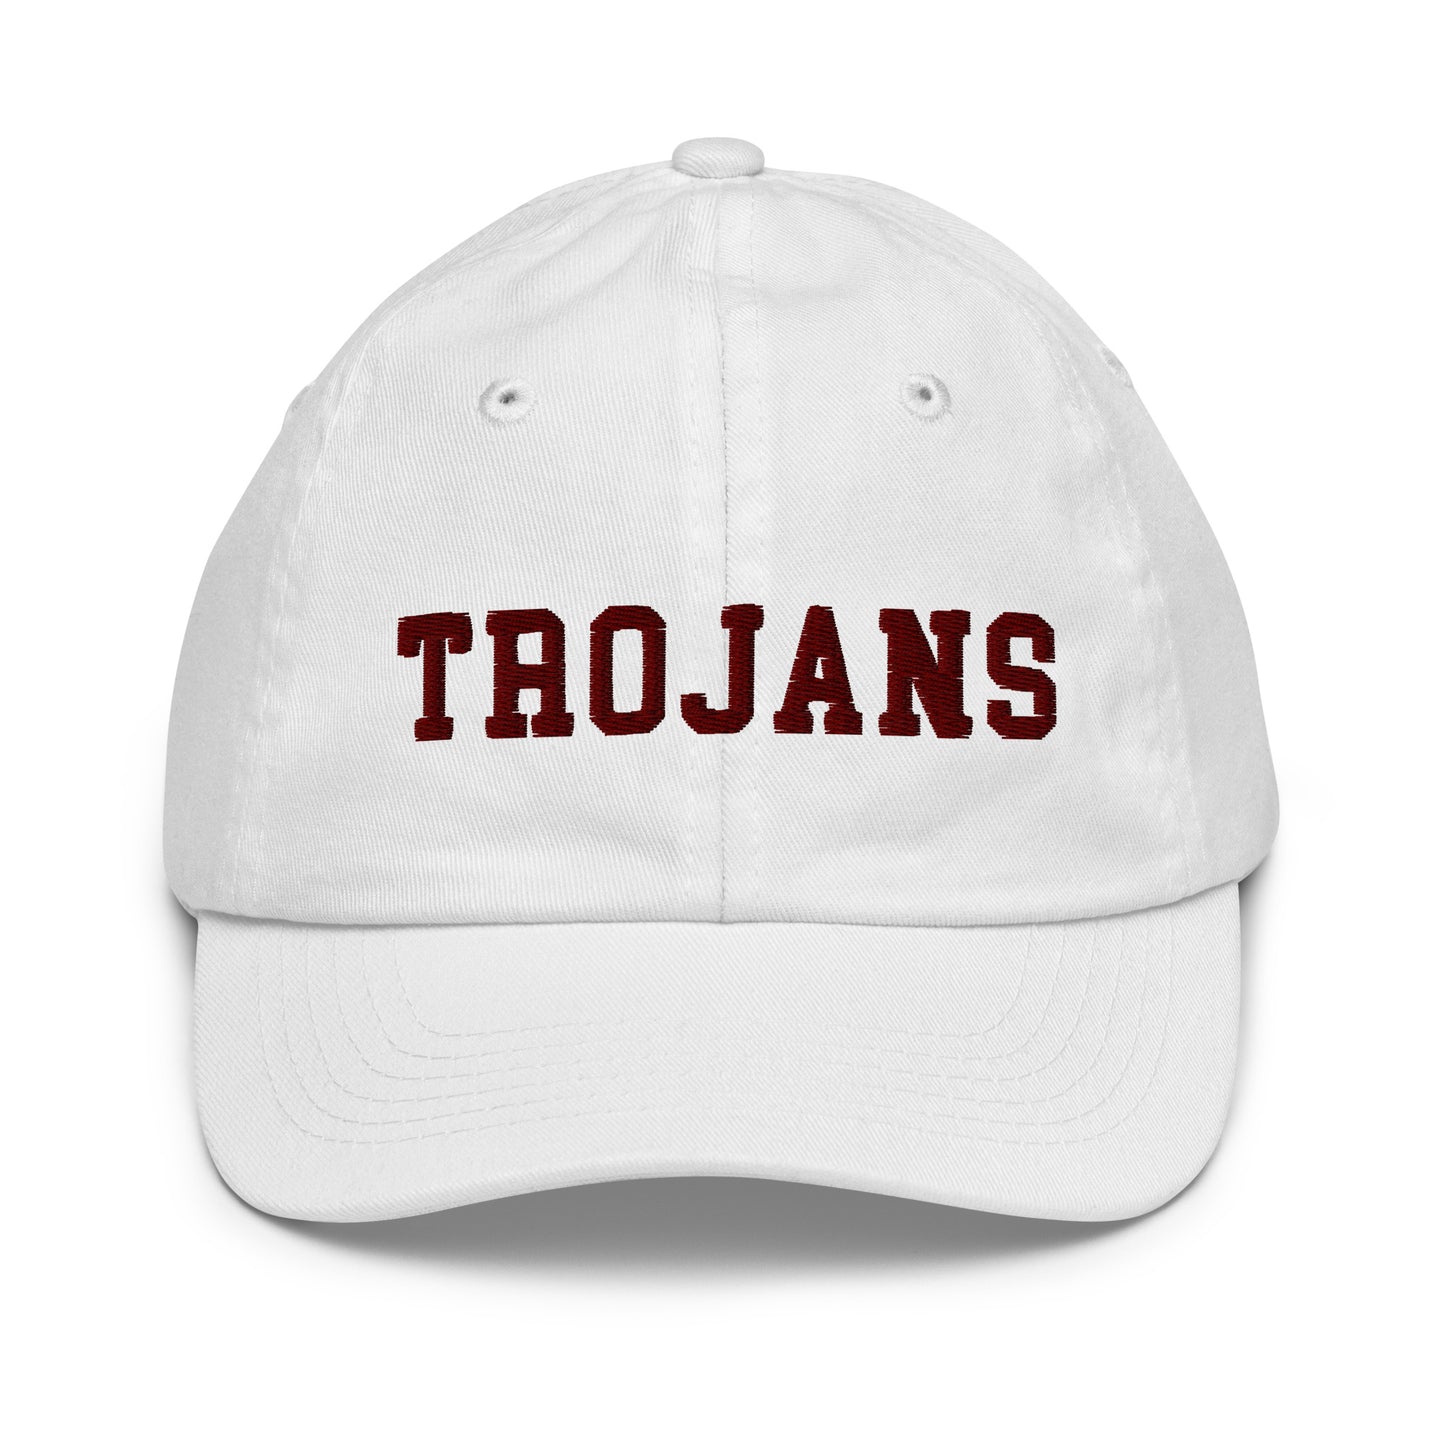 Trojans Youth Hat